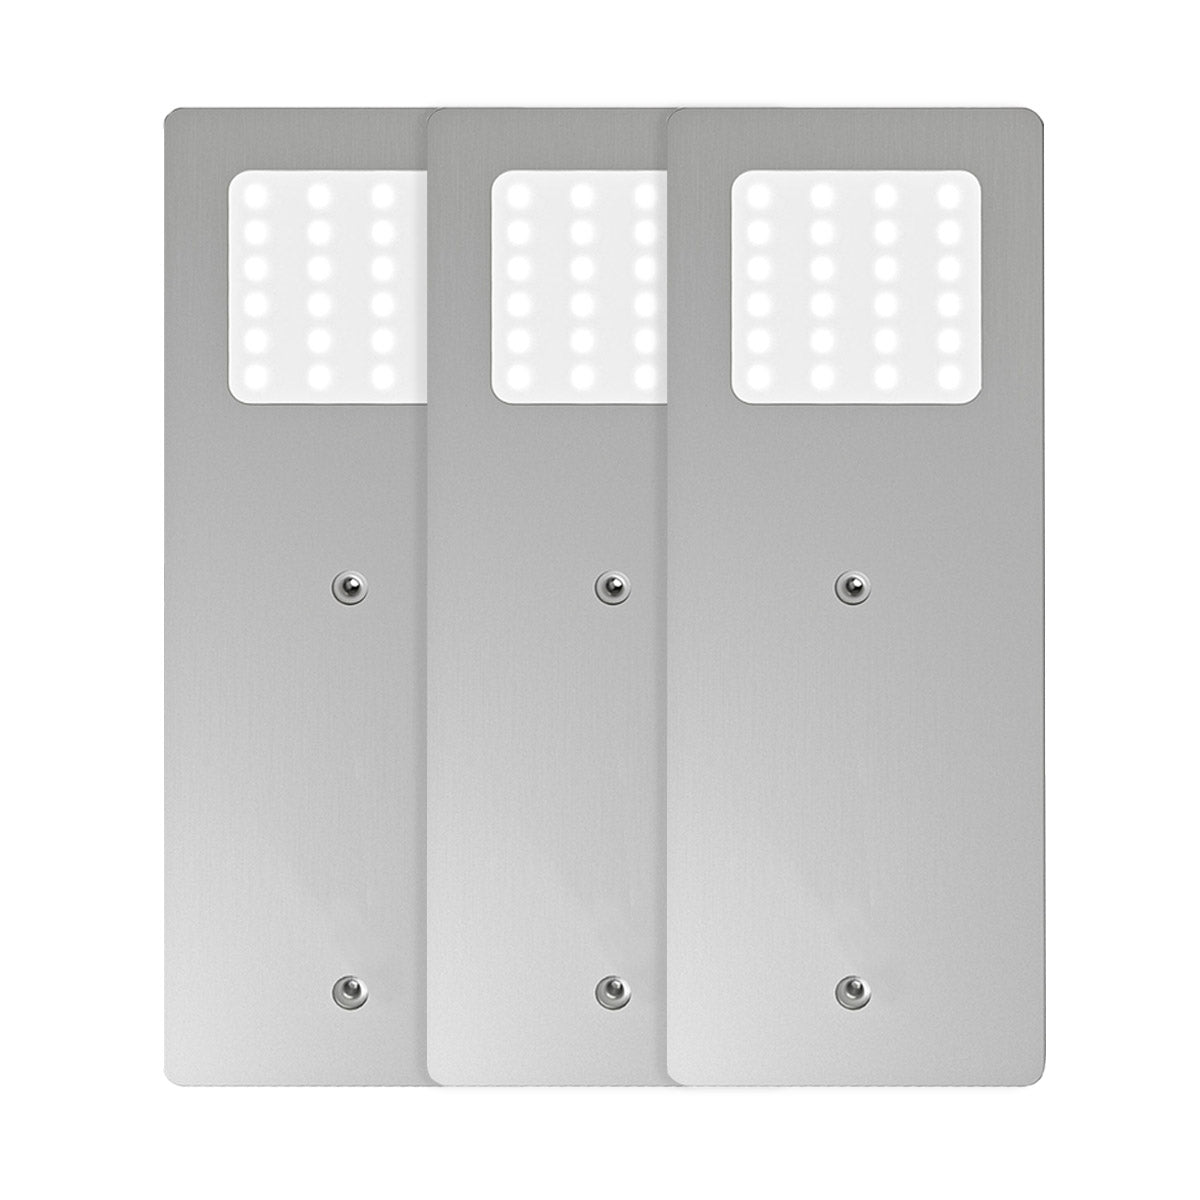 View 3 x Superslim LED Cabinet Lights information